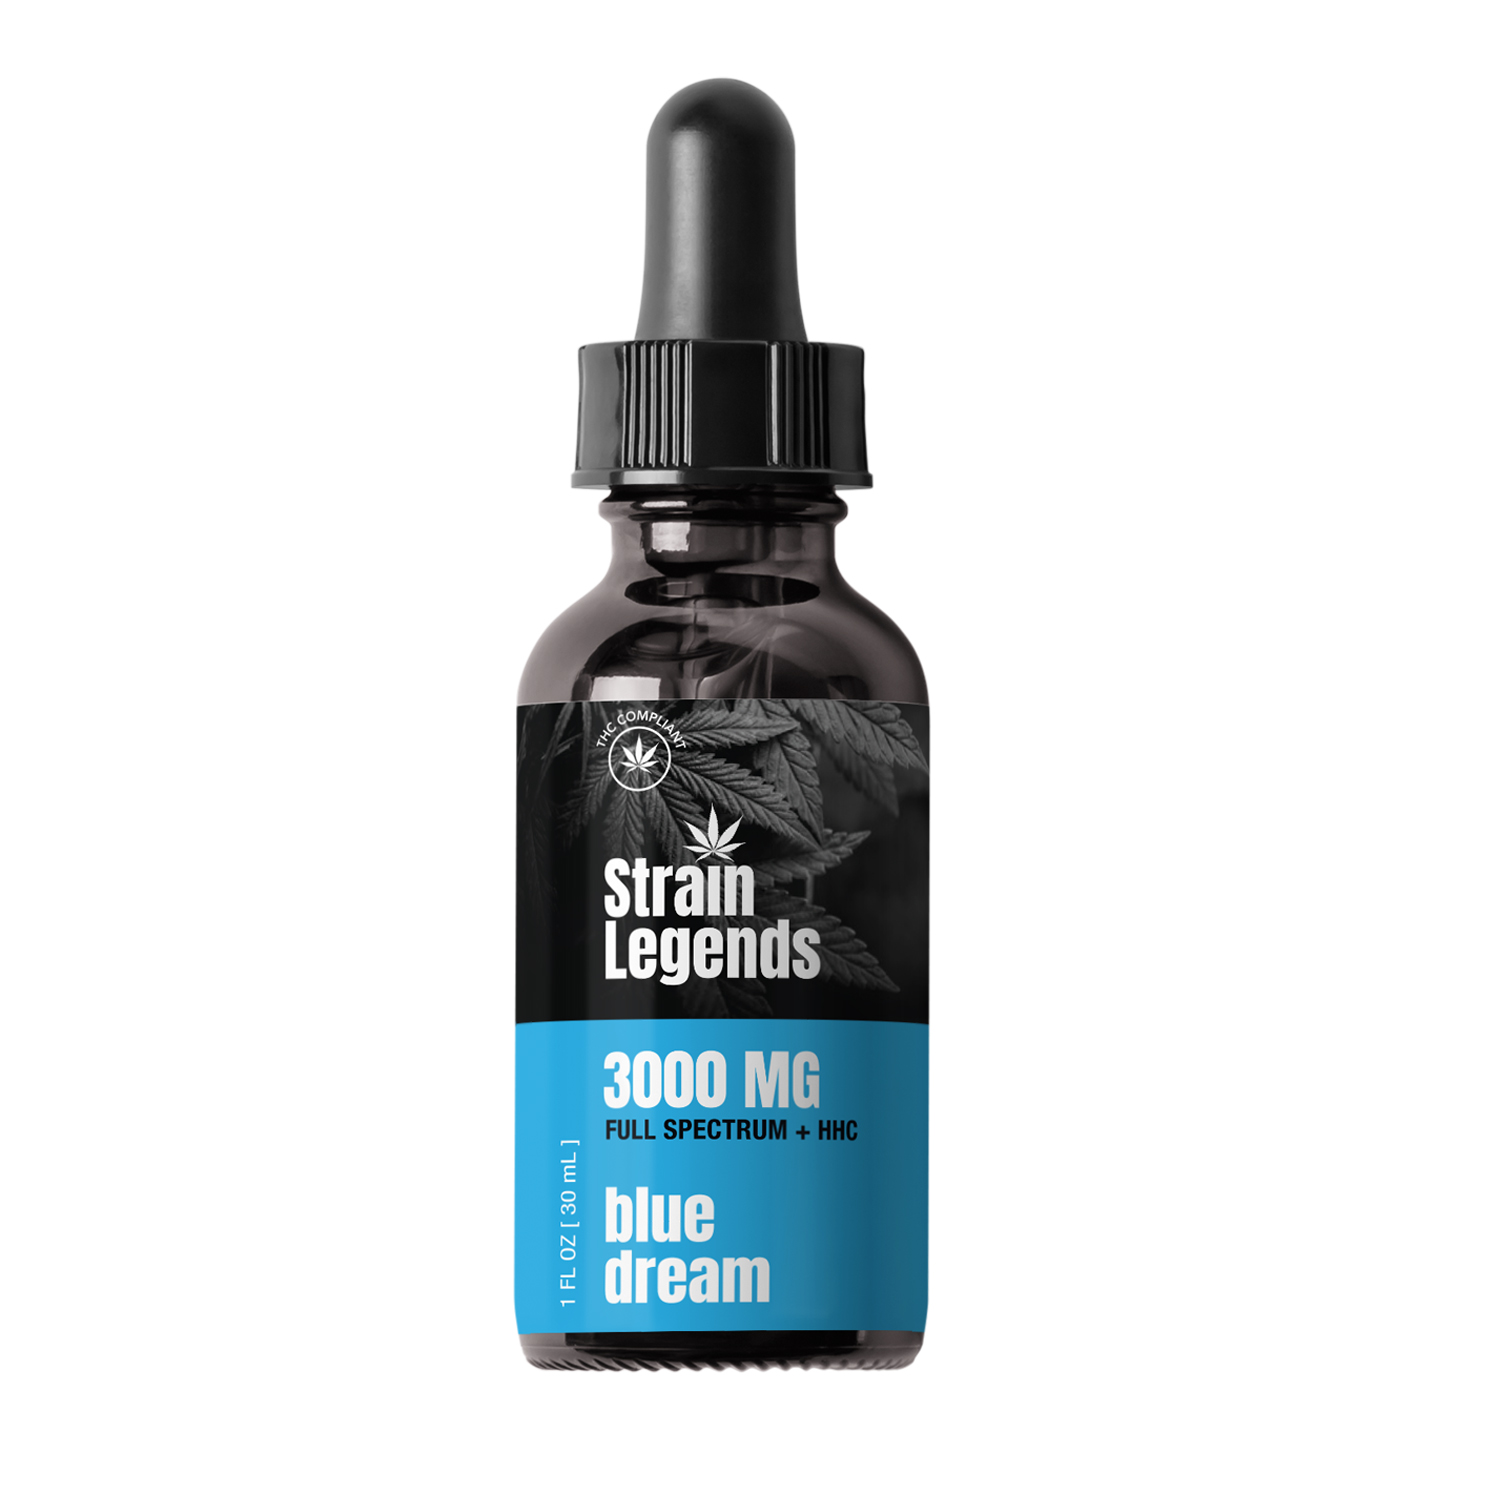 Strain Legends 3000 mg Full Spectrum + HHC Tincture, Blue Dream